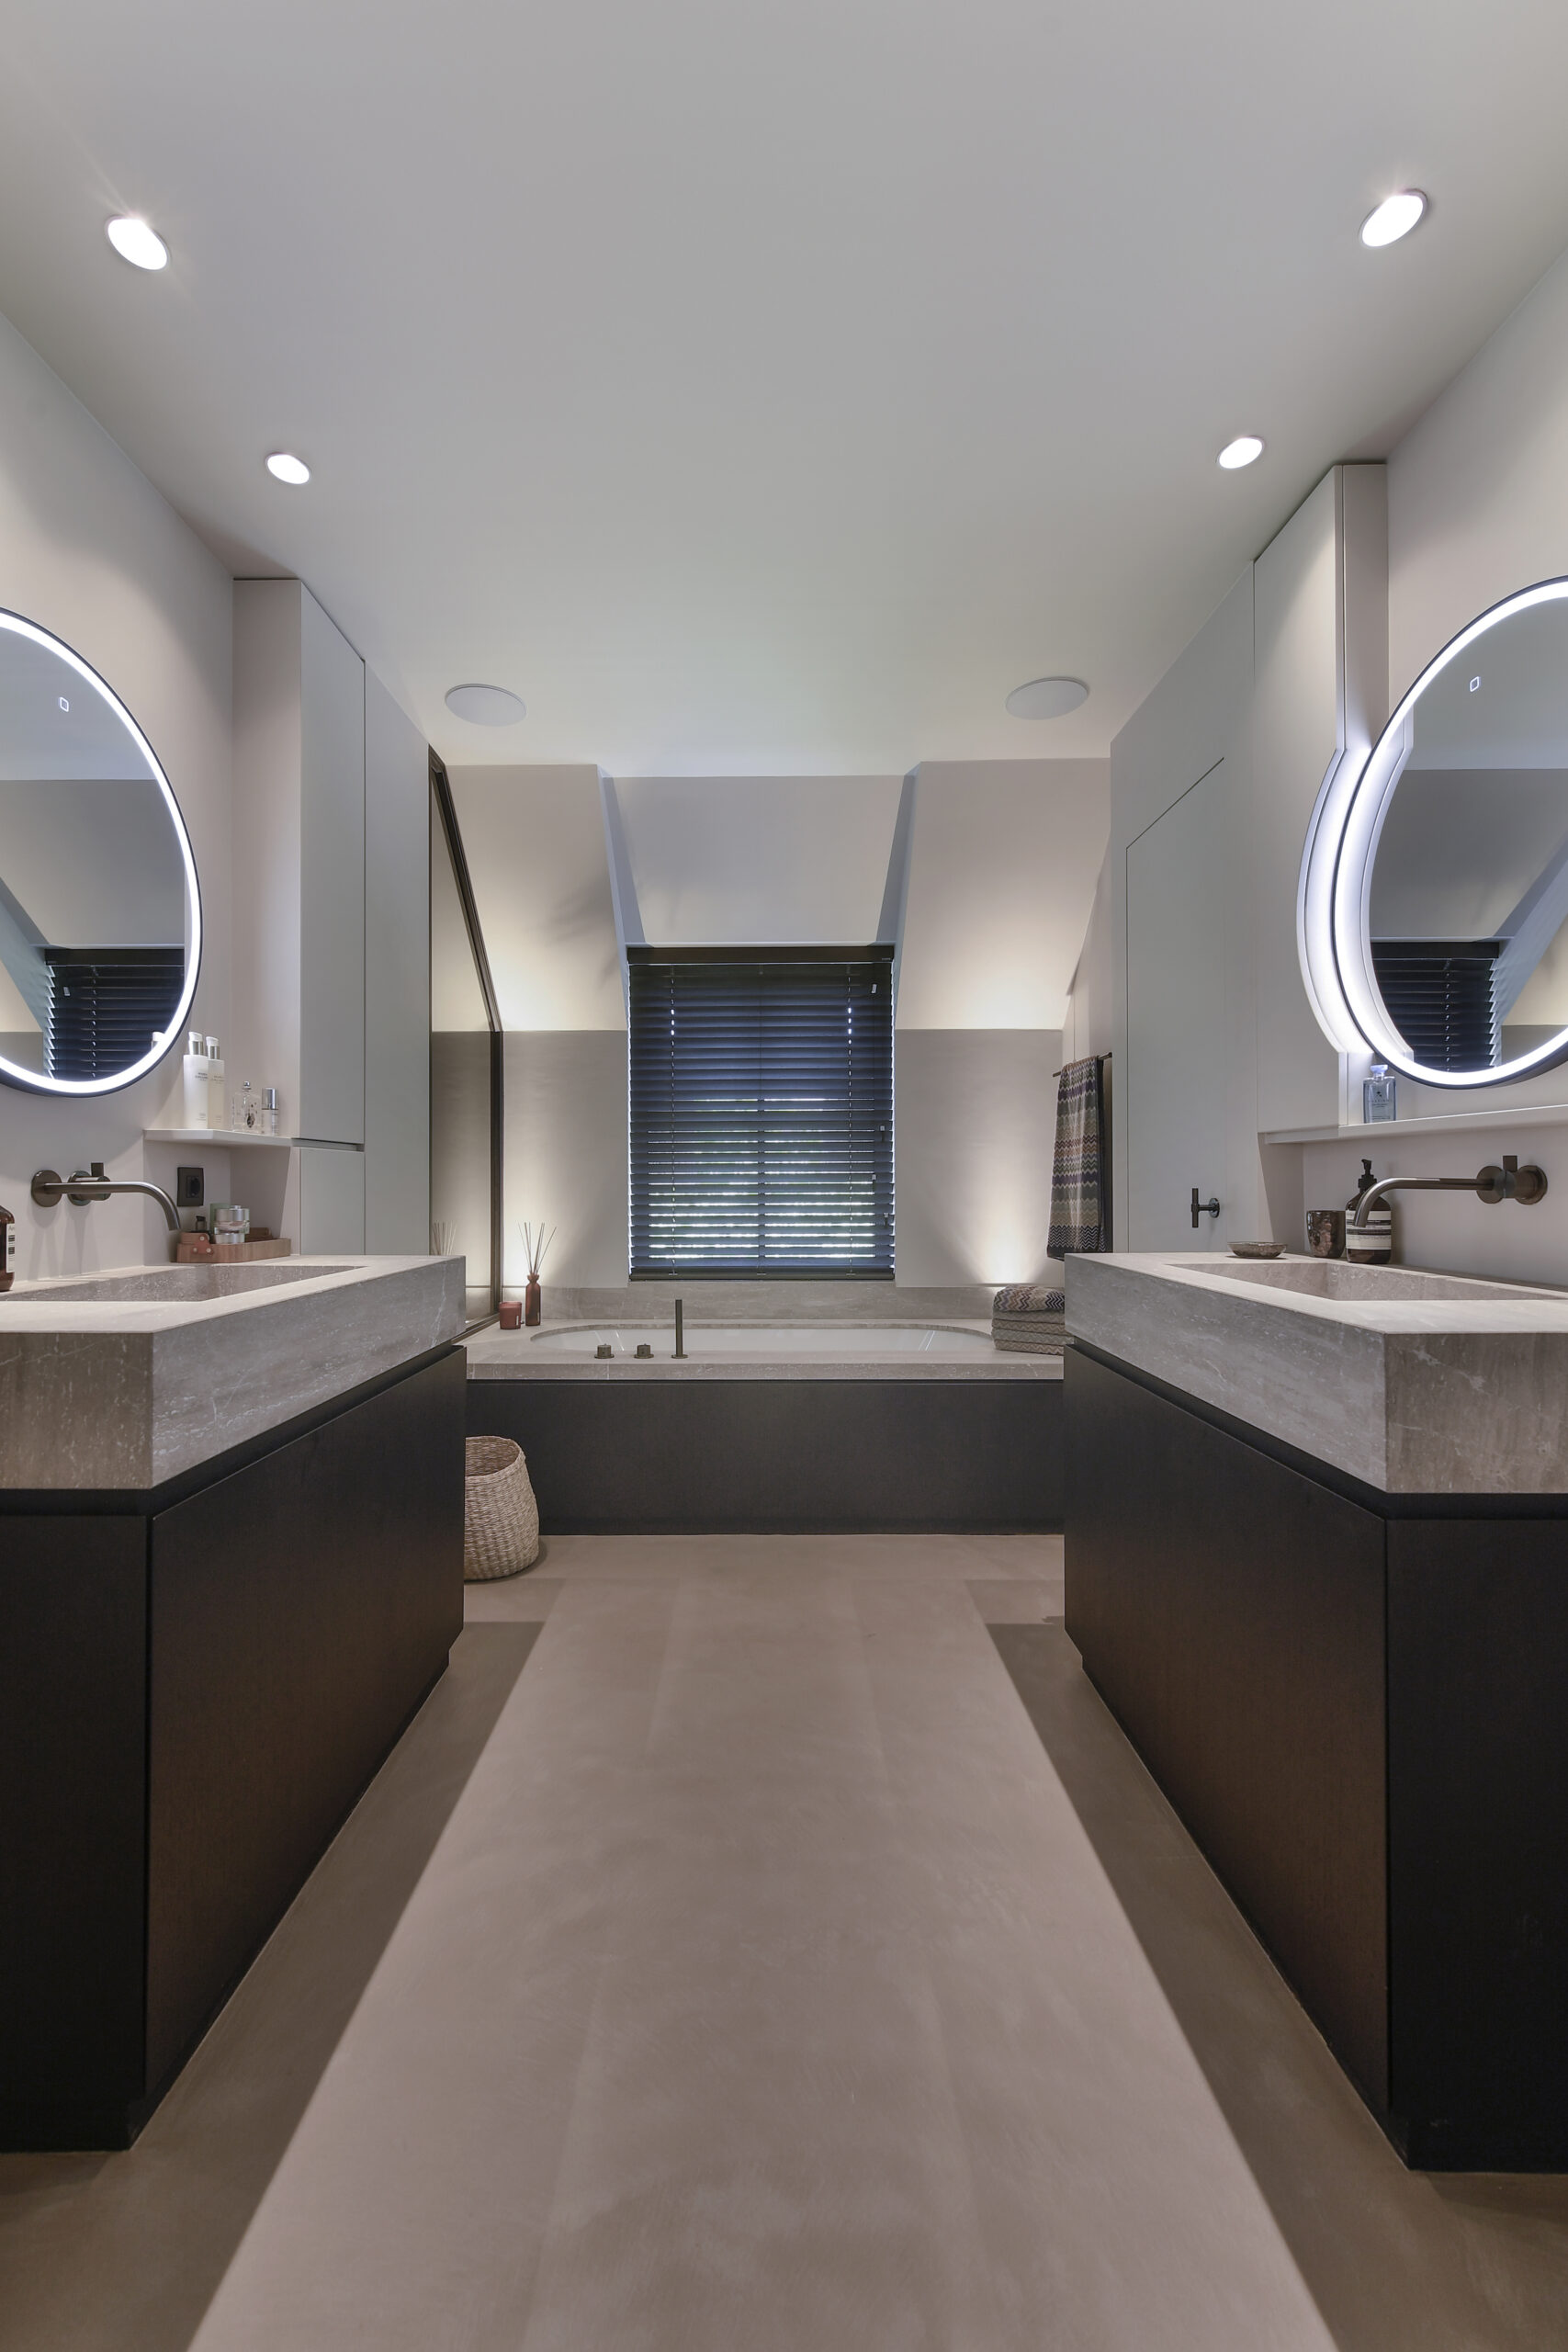 Modern bathroom with dual sinks, illuminated mirrors, and a built-in bathtub.